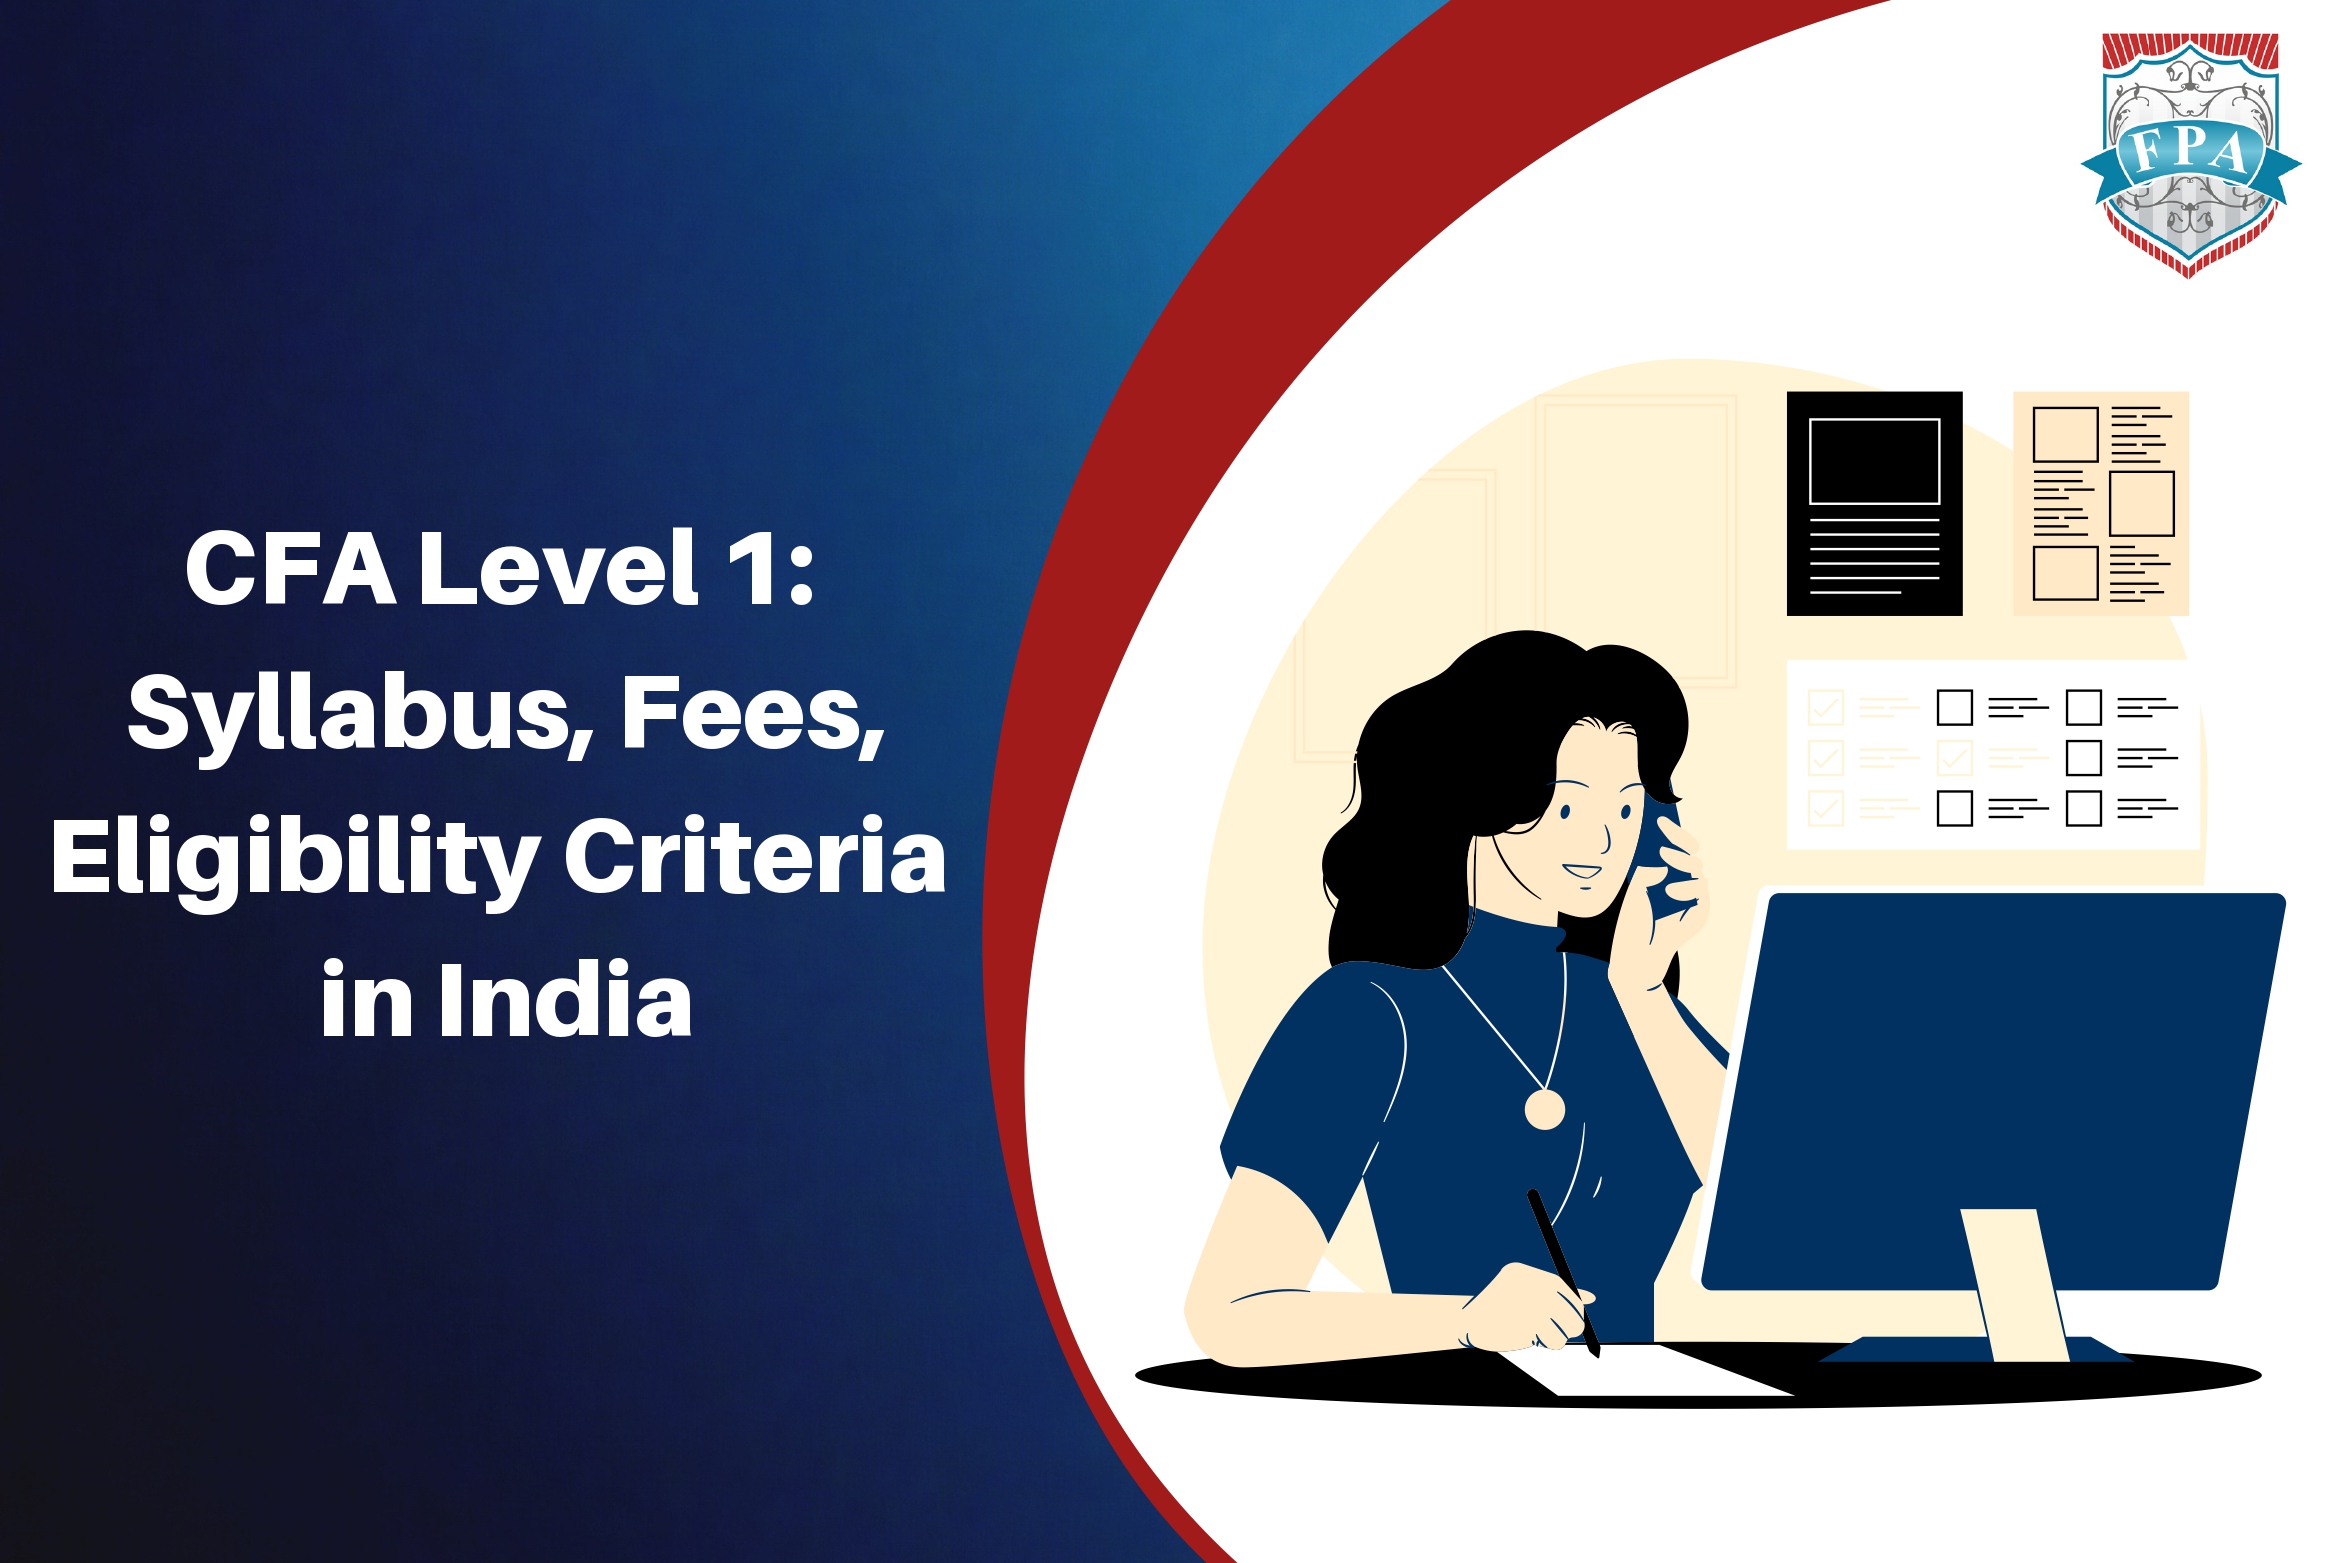 CFA Level 1 Syllabus, Fees, Eligibility Criteria in India in Details